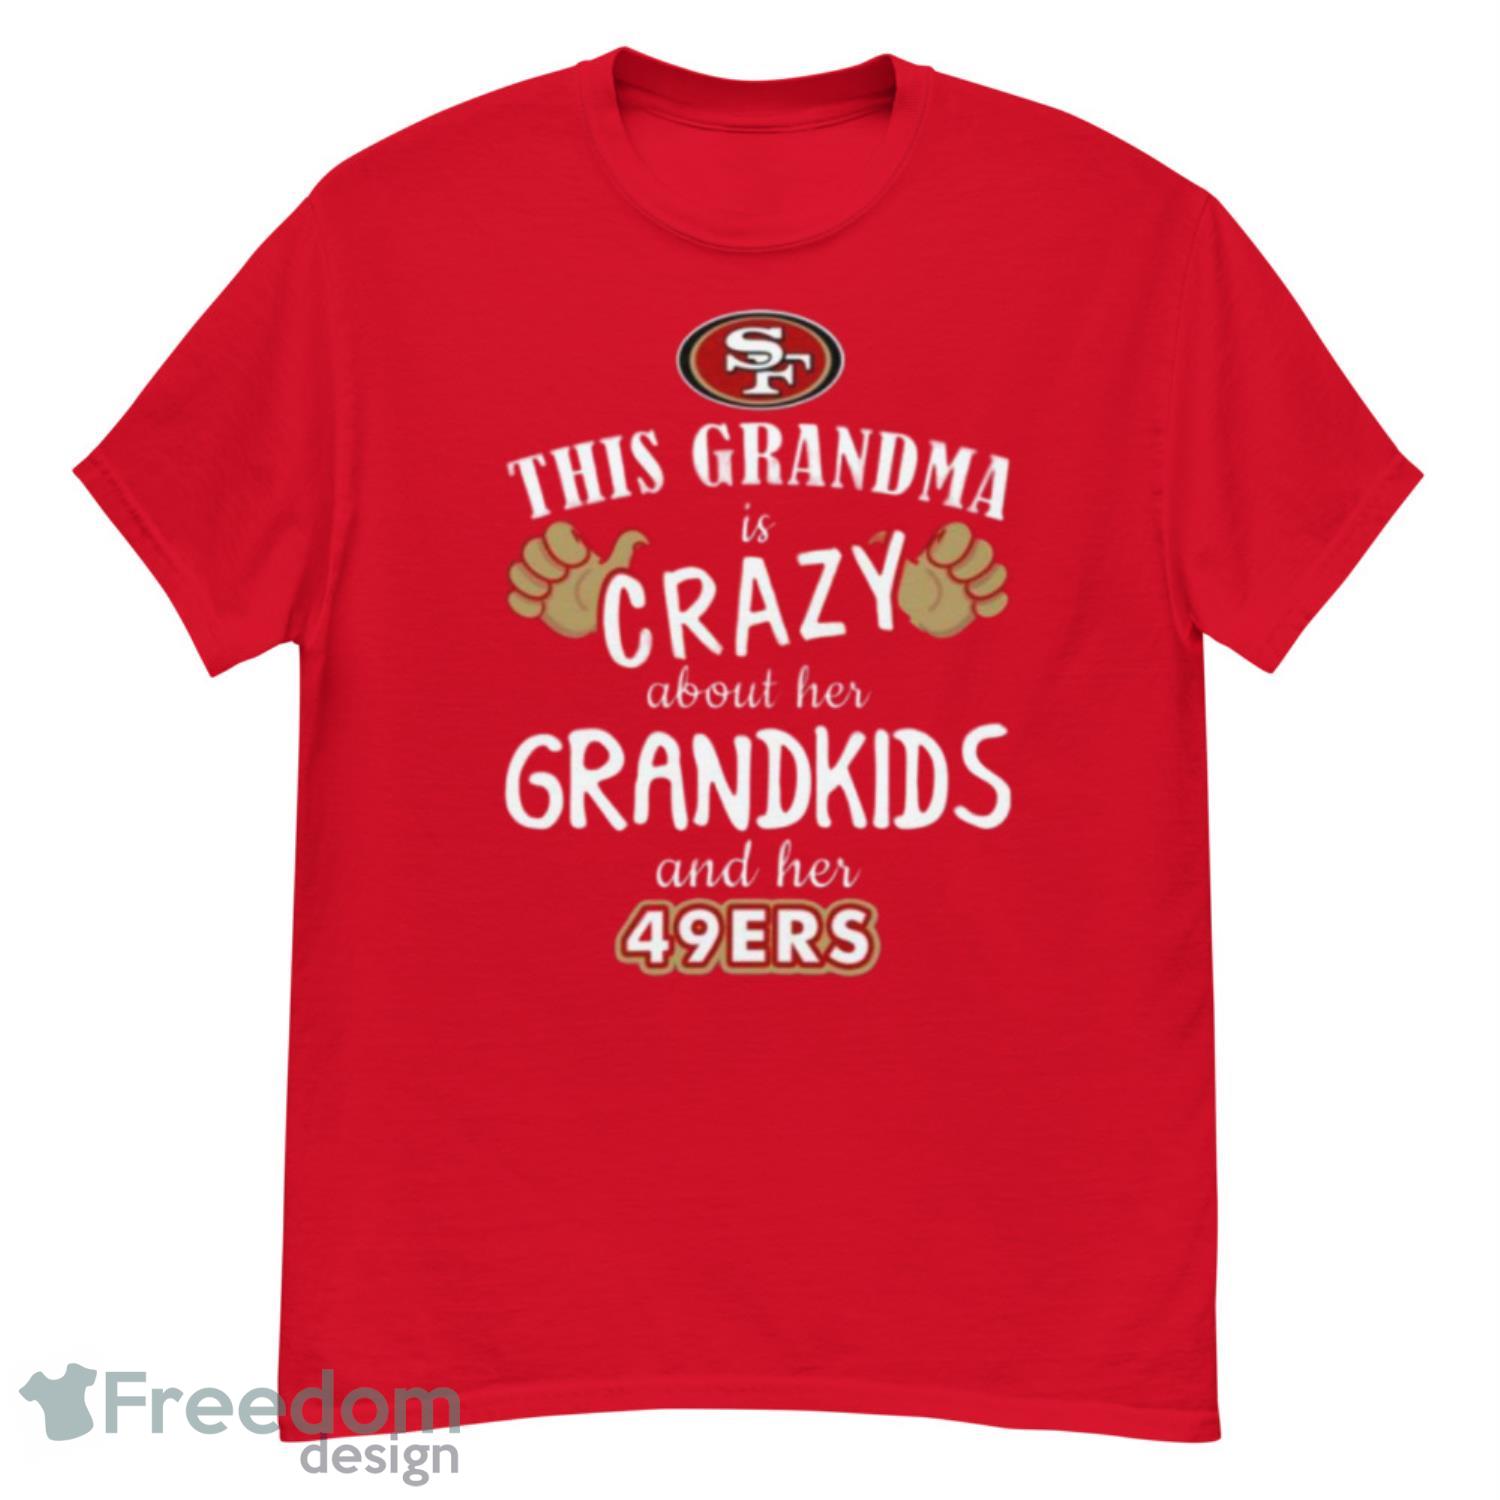 49ers grandma shirt